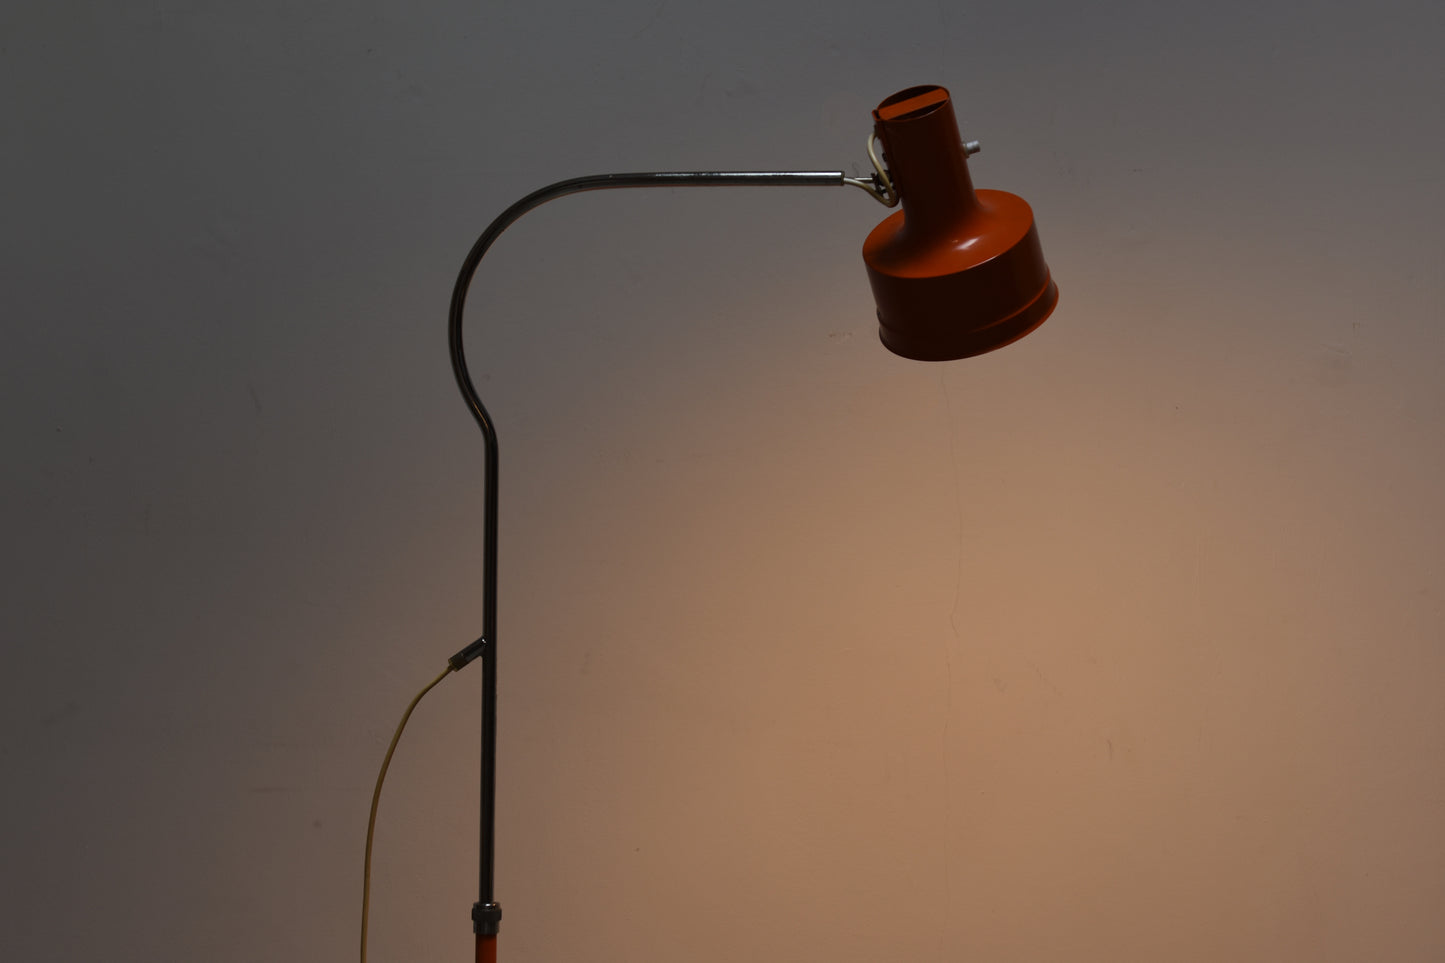 1960s floor lamp with orange shade